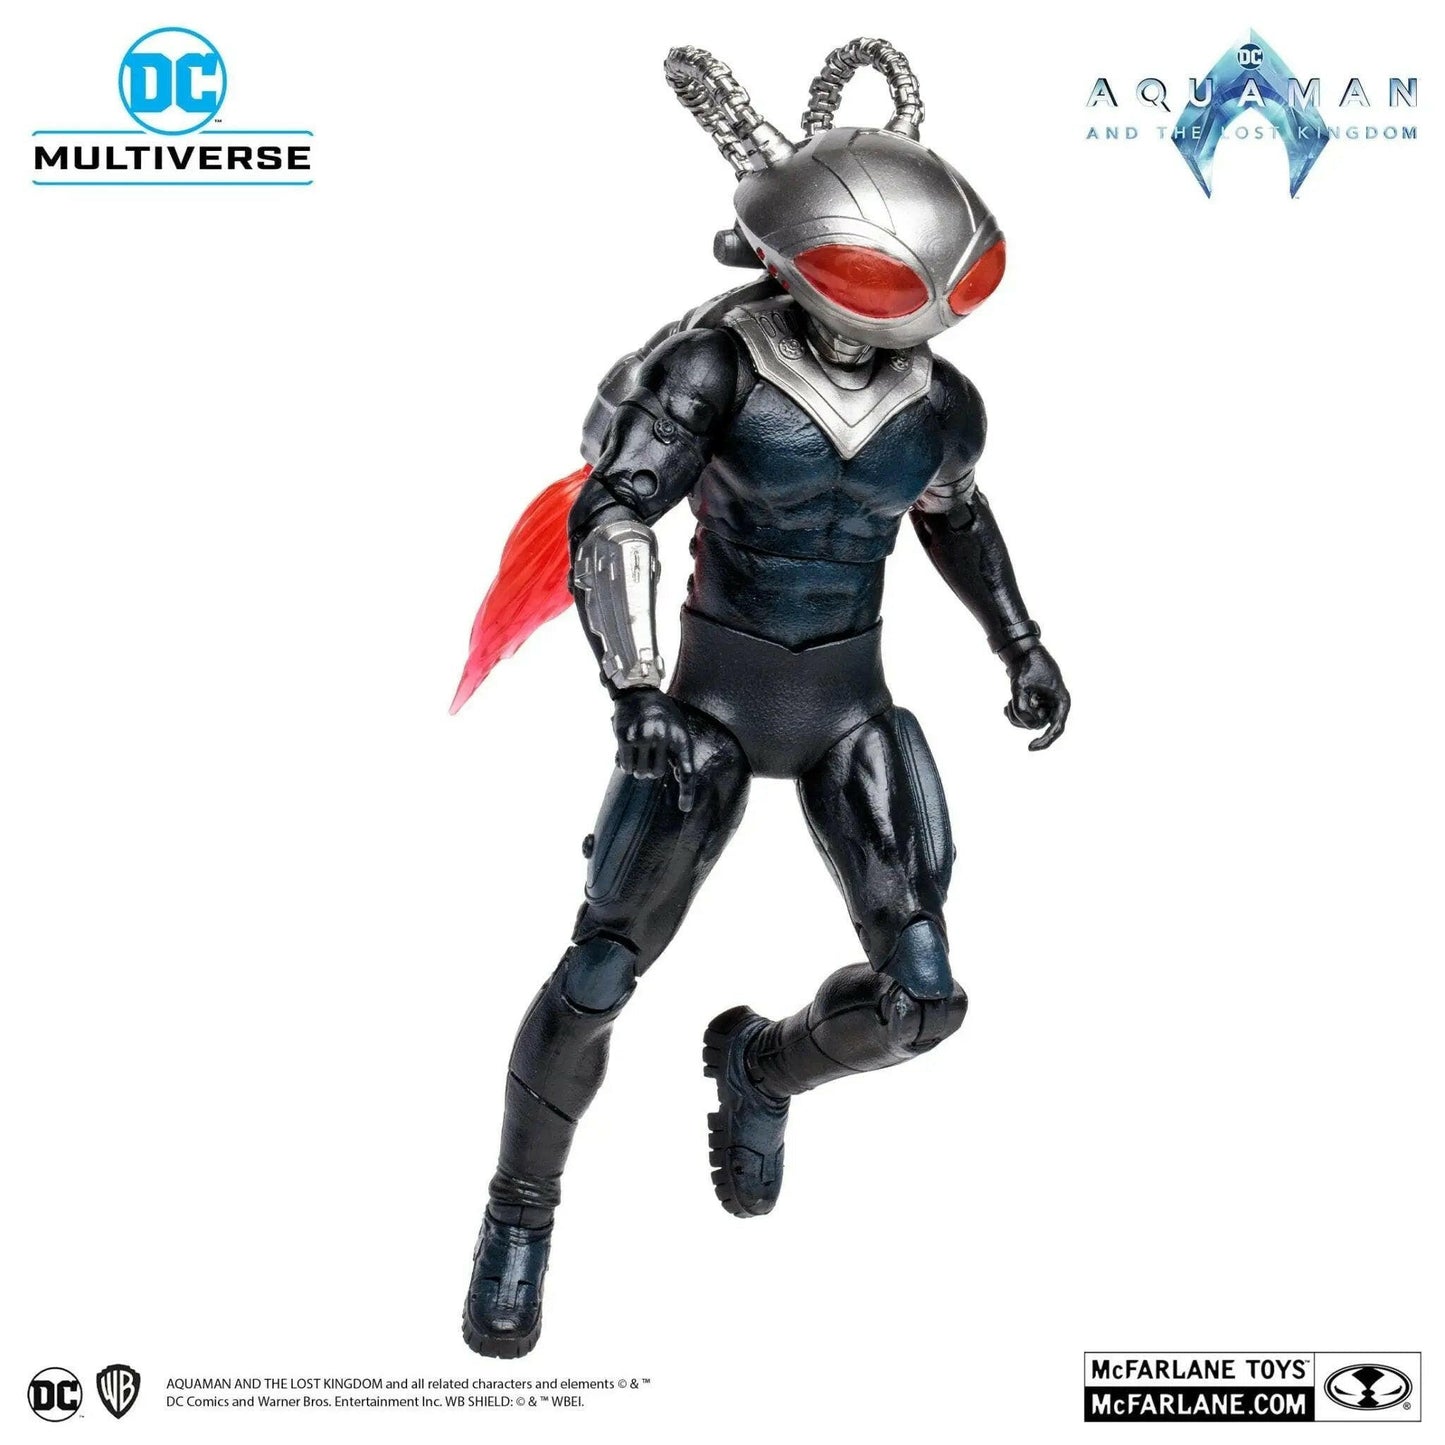 McFarlane DC Multiverse Aquaman and the Lost Kingdom Actionfigur Black Manta 18cm - Toy-Storage